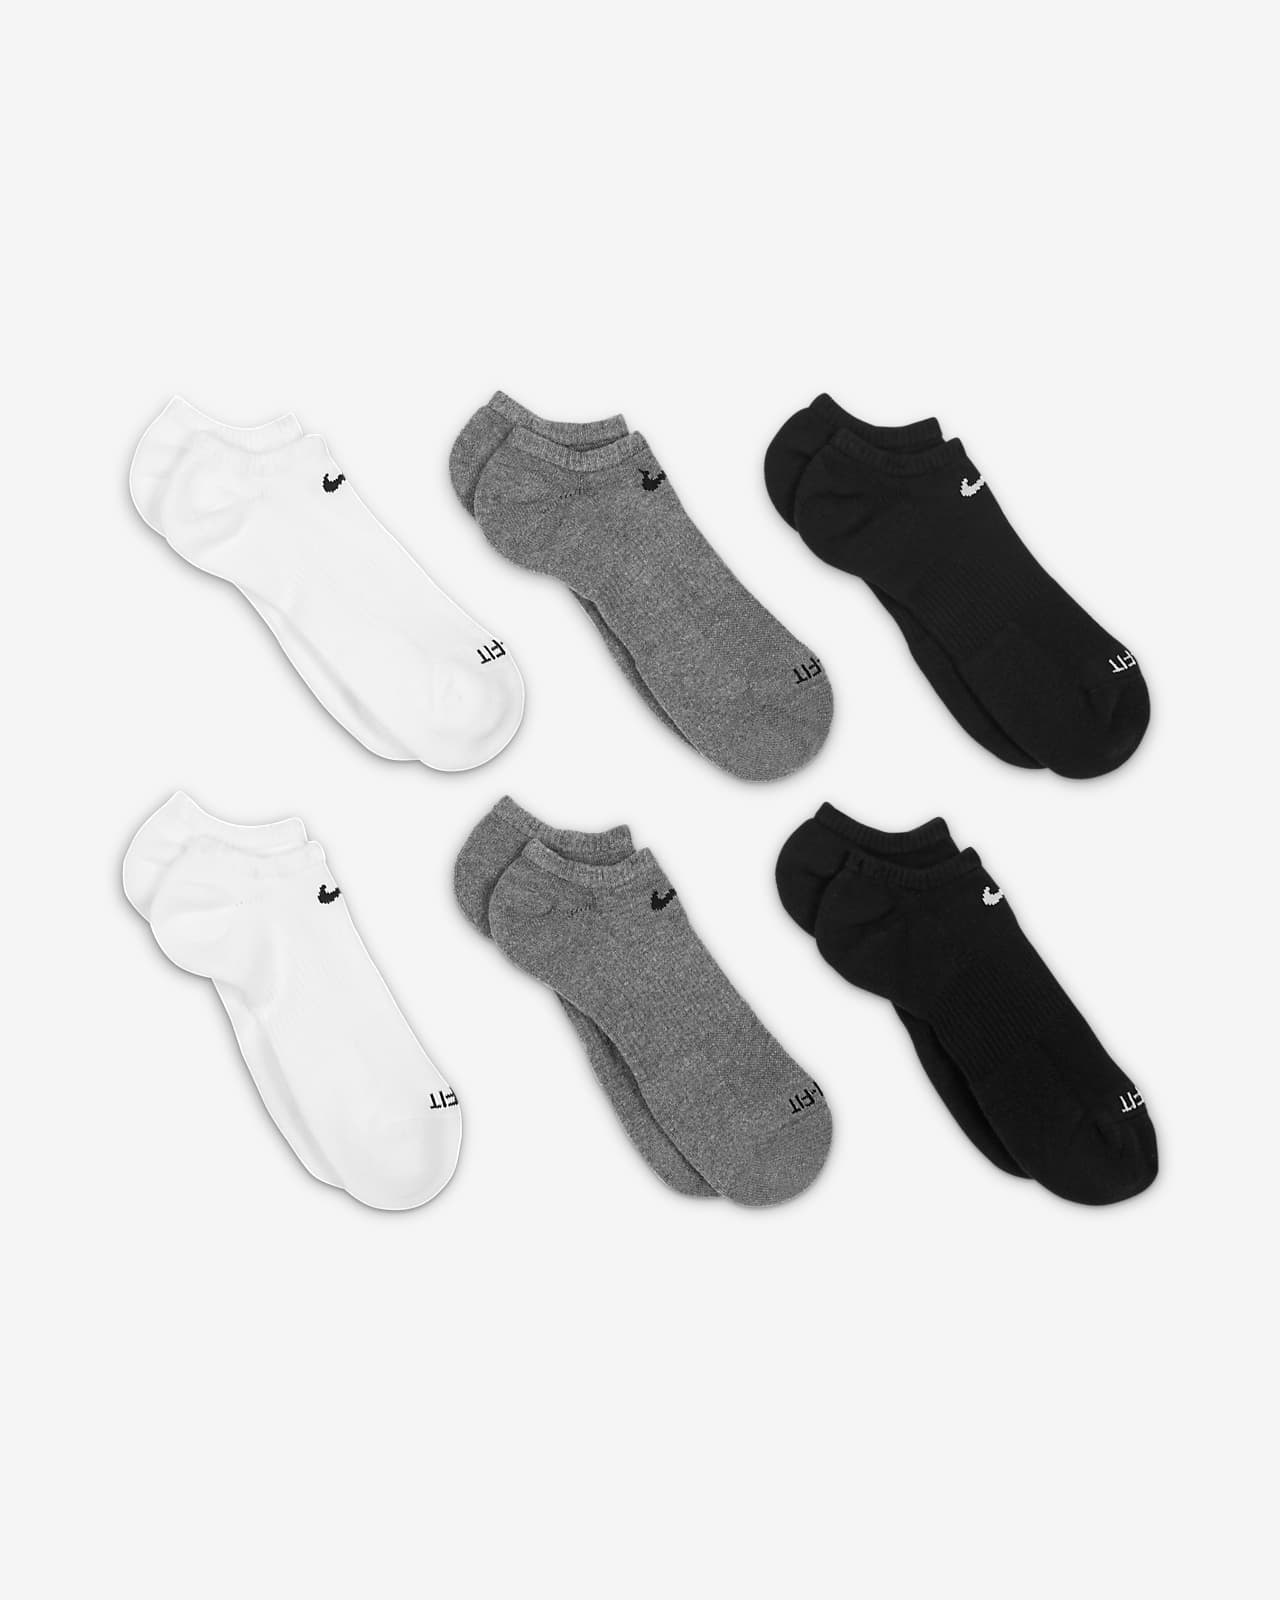 Nike Grip Power Crew Socks-White-Black Lacrosse Socks